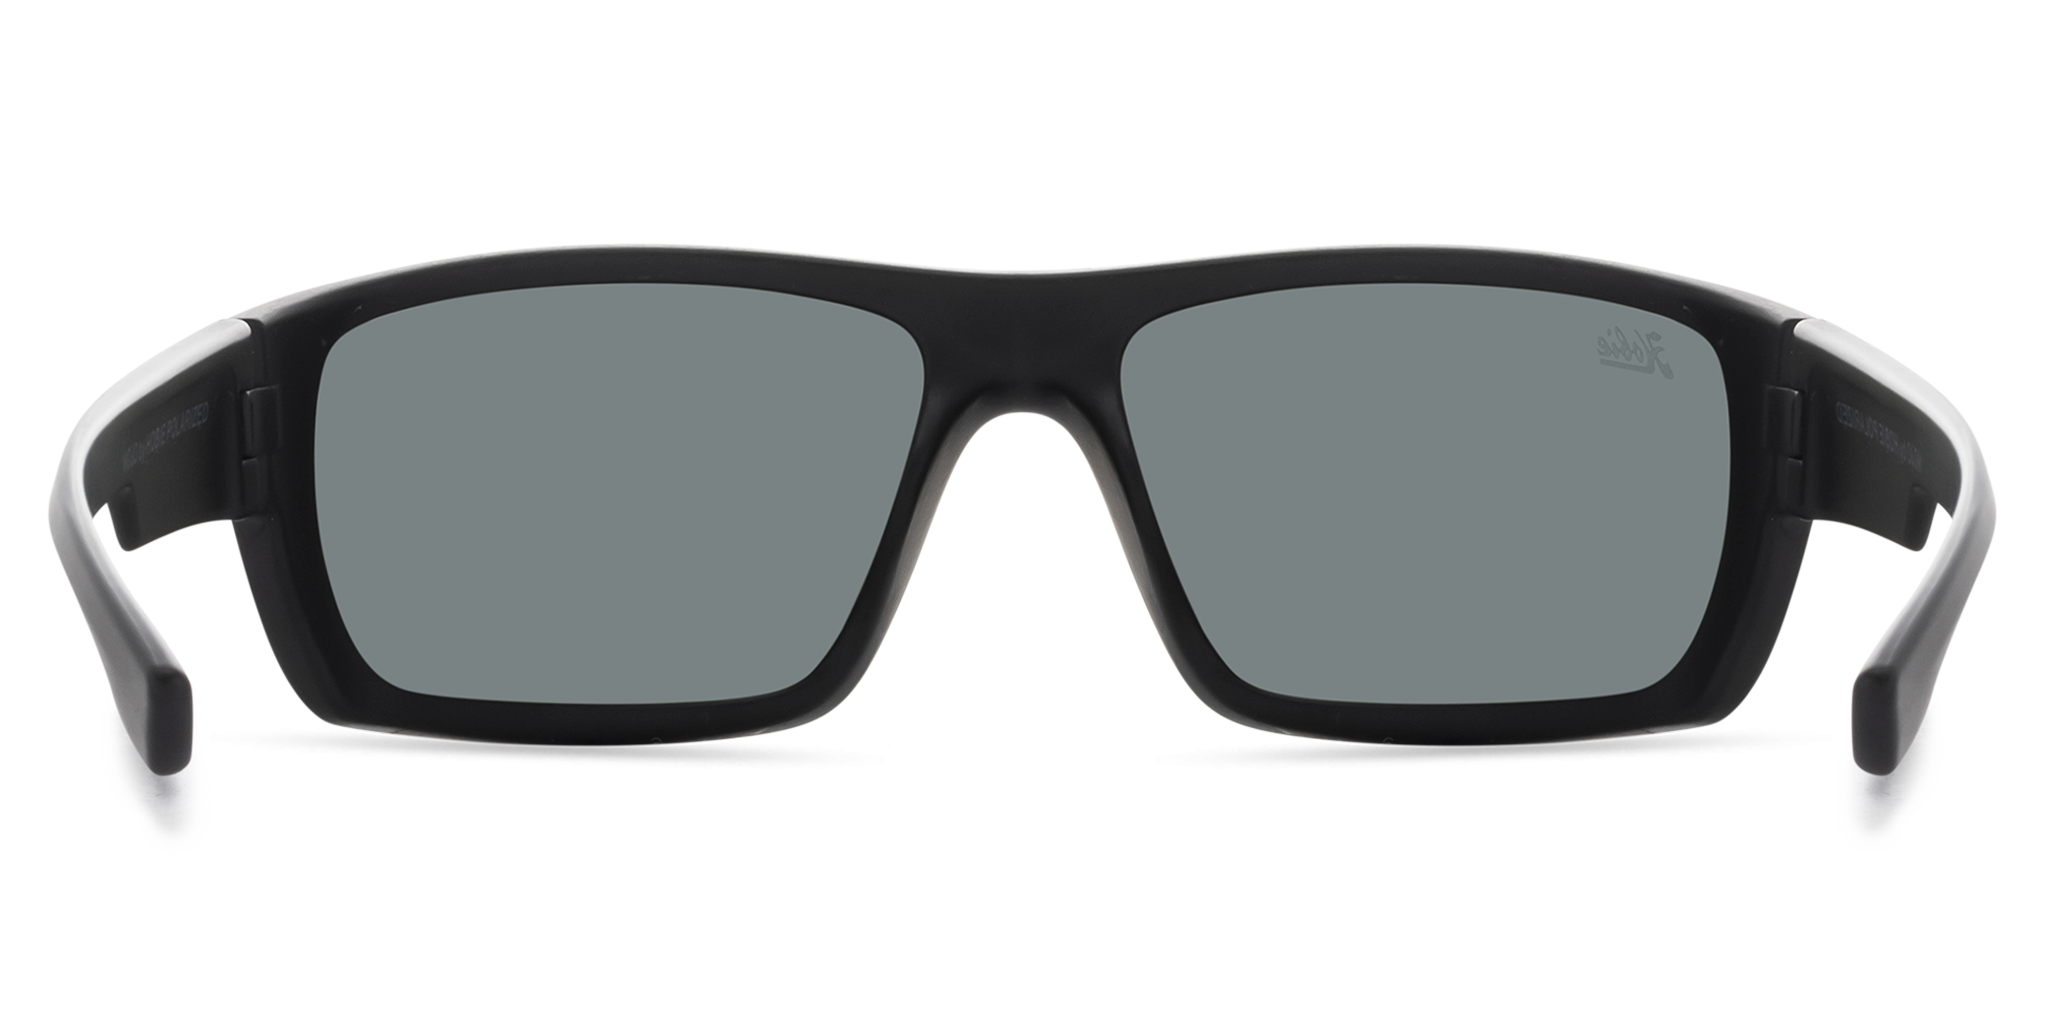 JOBE Beam Floatable Sunglasses 426018004 